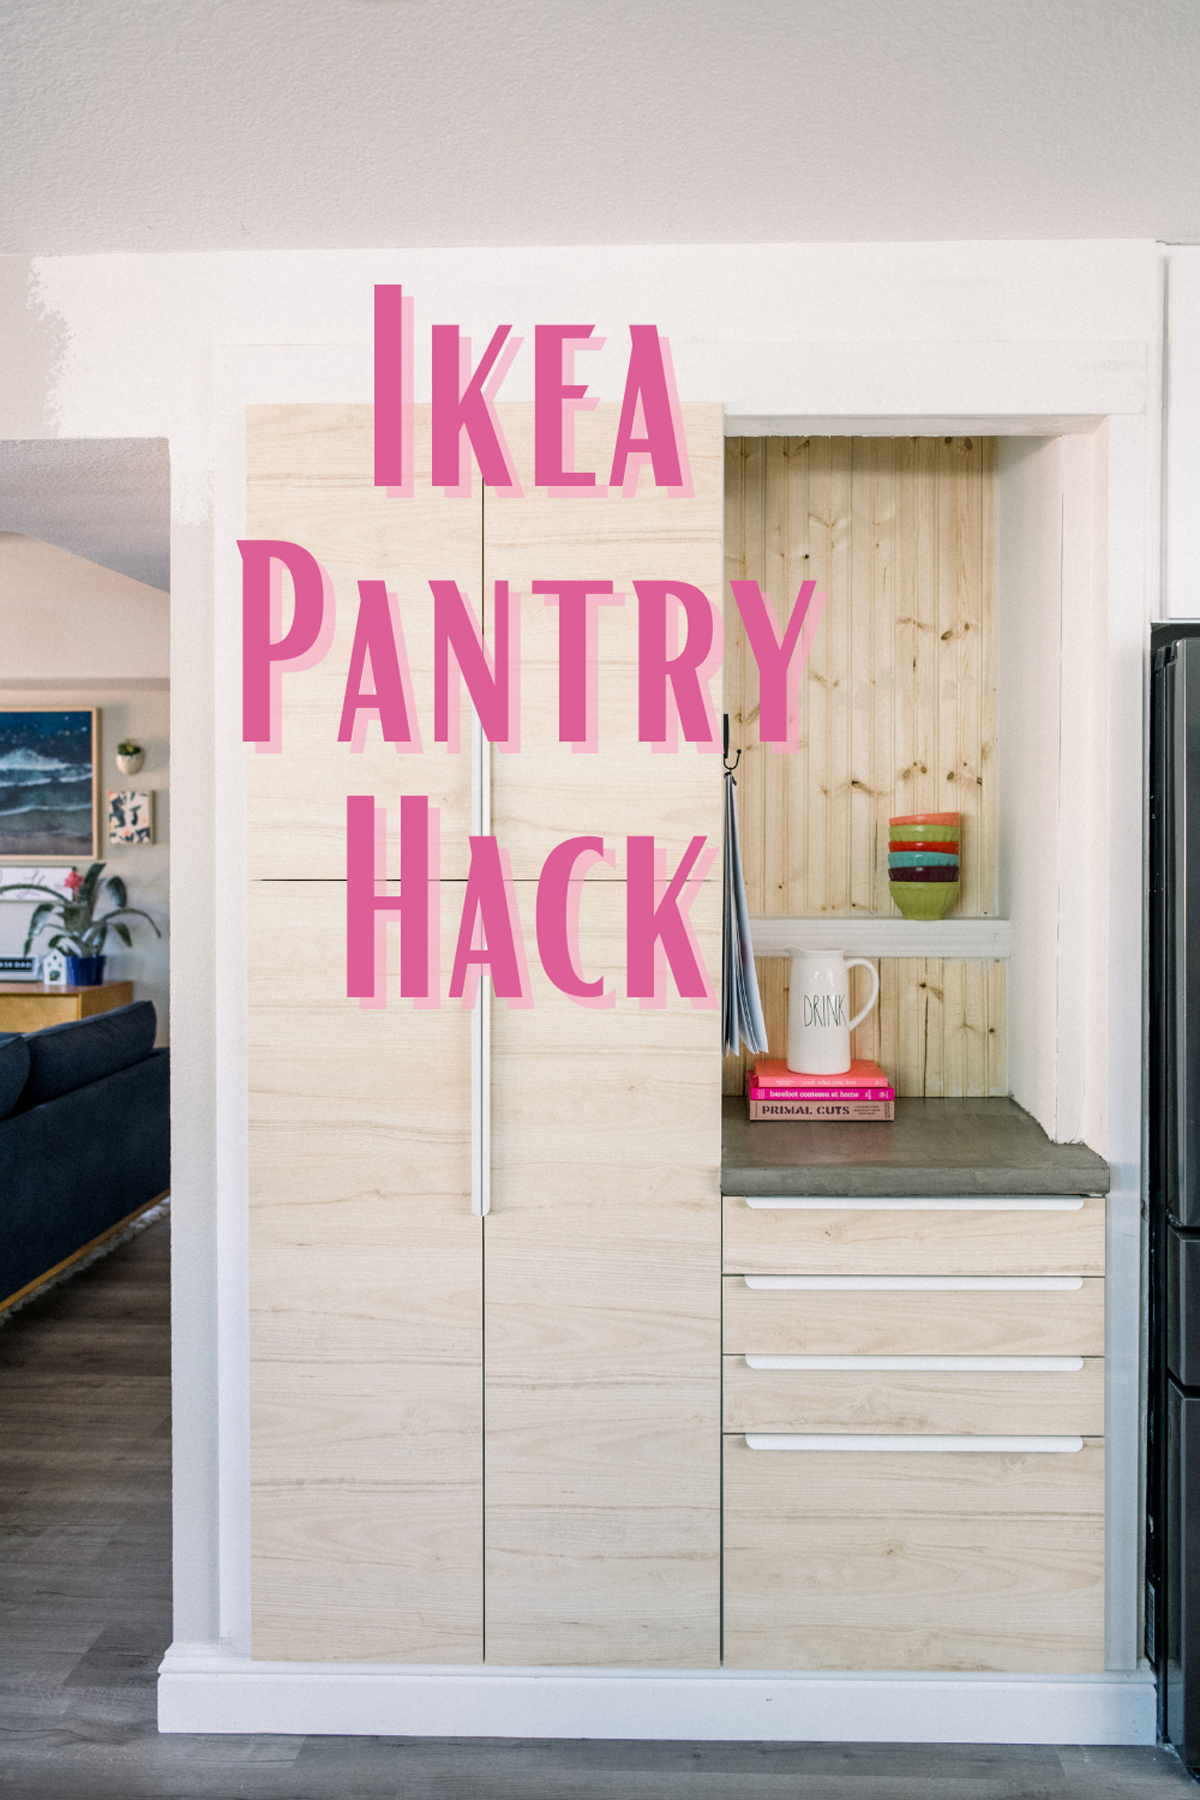 Ikea pantry hack